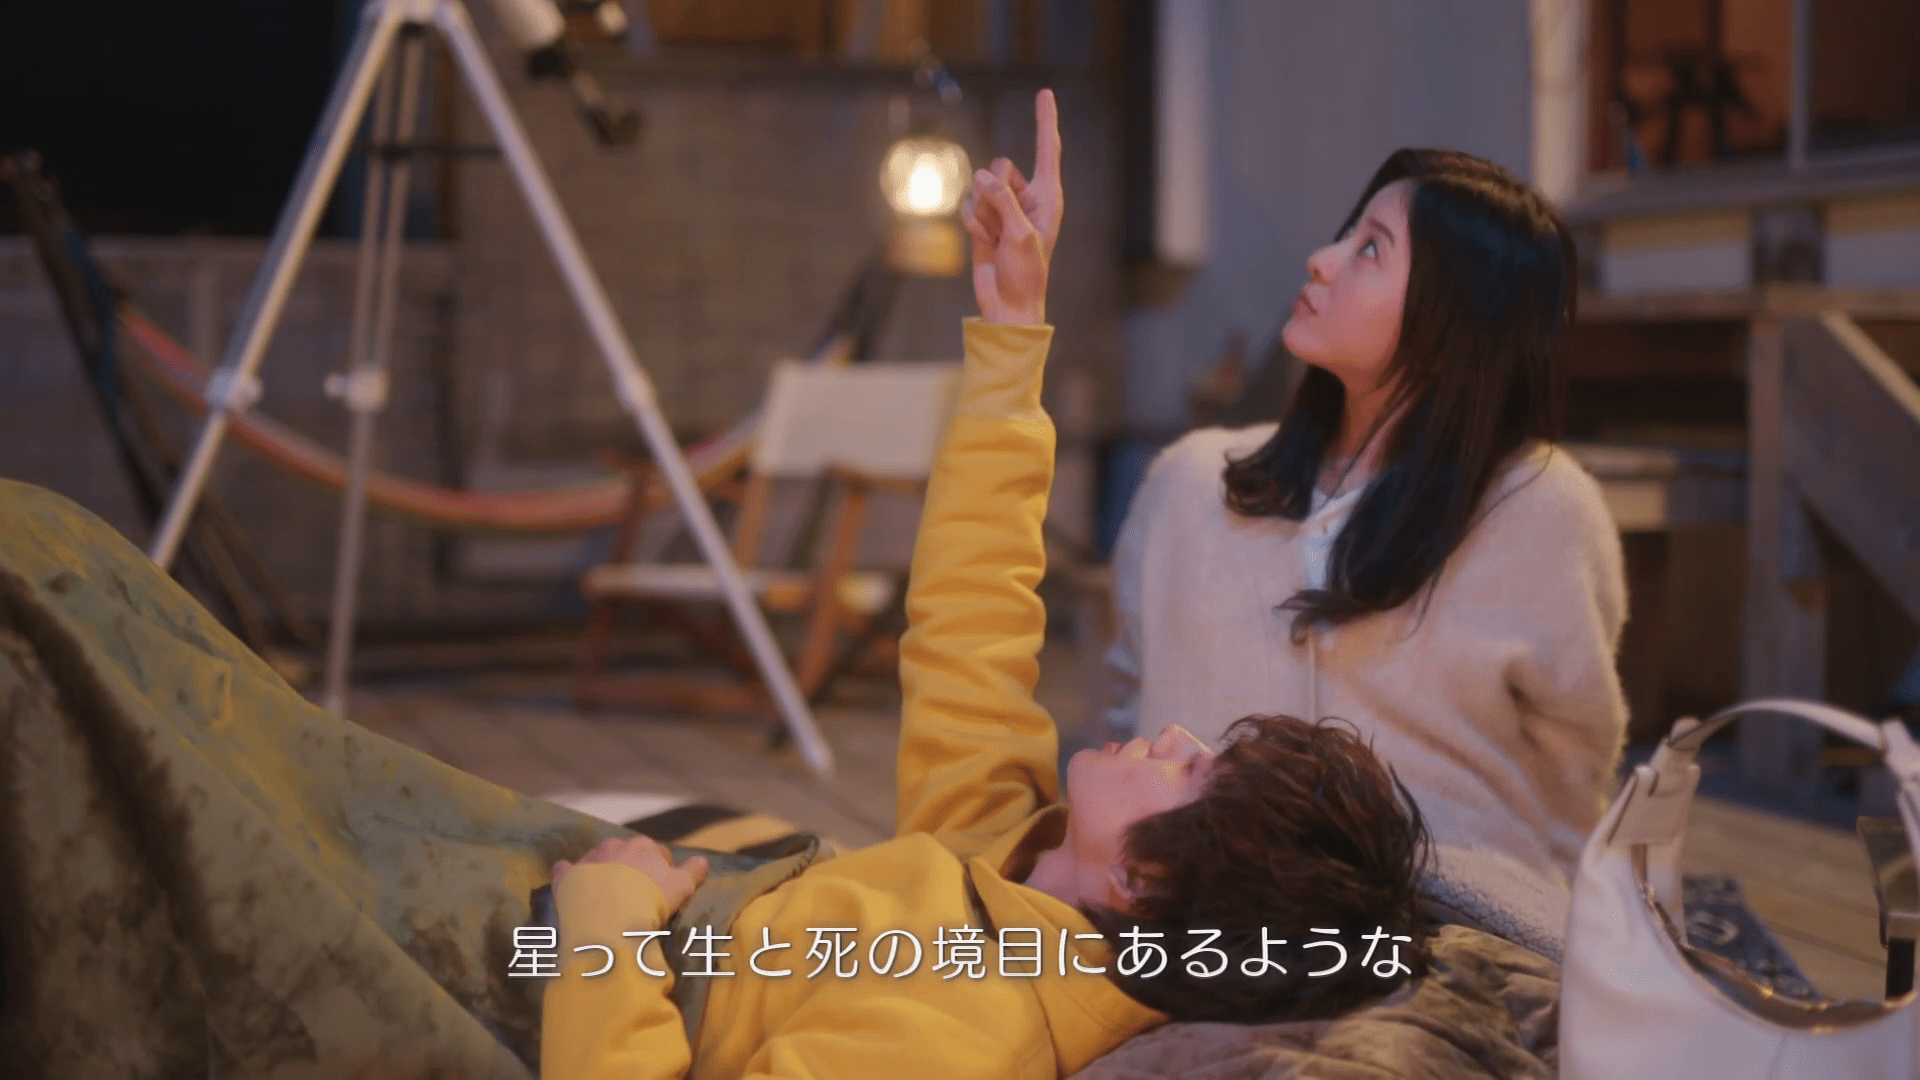 Yoshitaka Yuriko as Yukimiya Suzu and Kitamura Takumi as Hiiragi Issei in episode 6 of the jdrama On A Starry Night